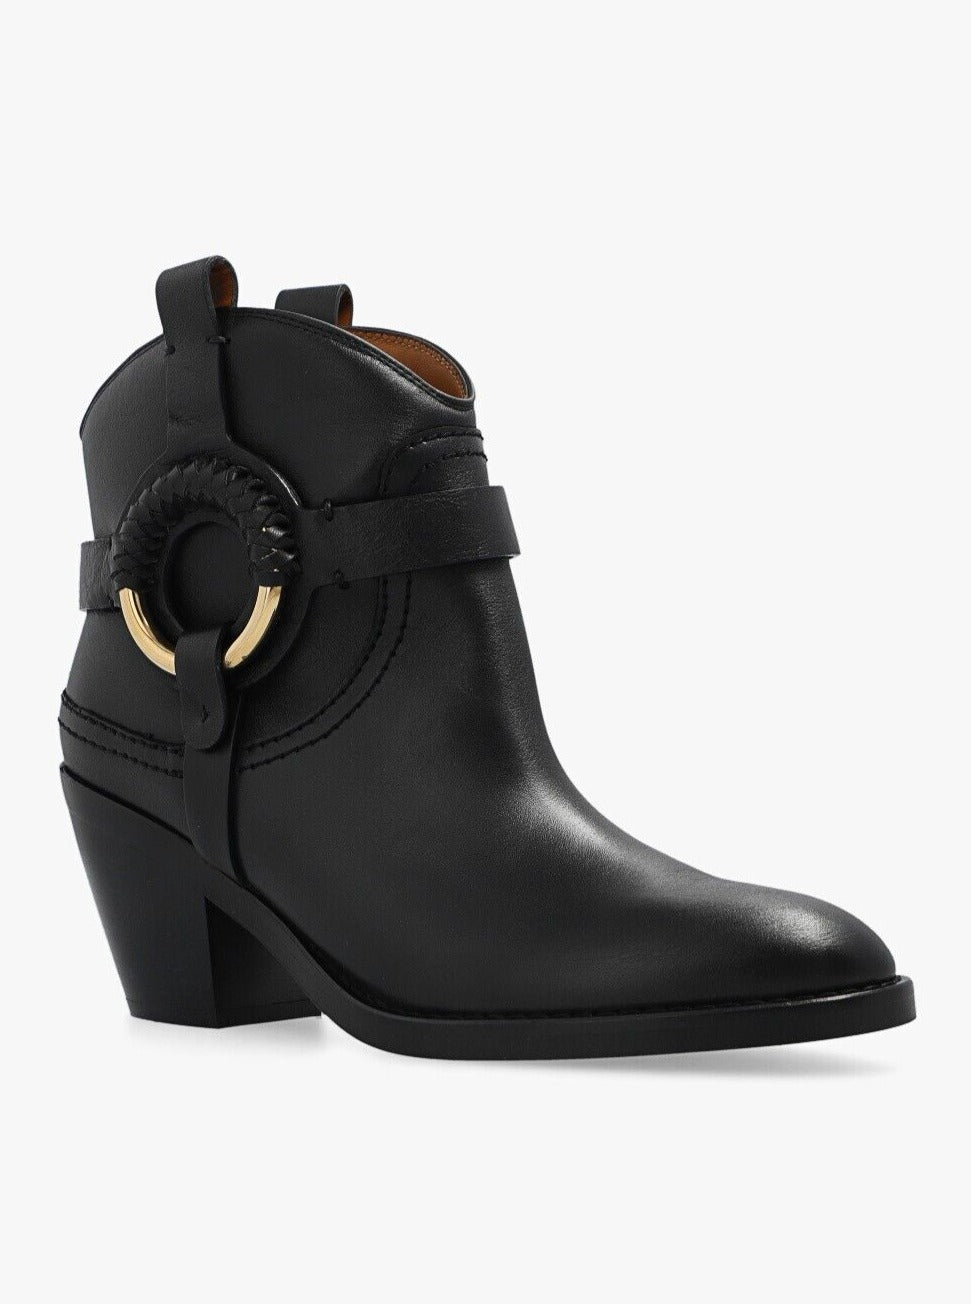 Hana boots, black